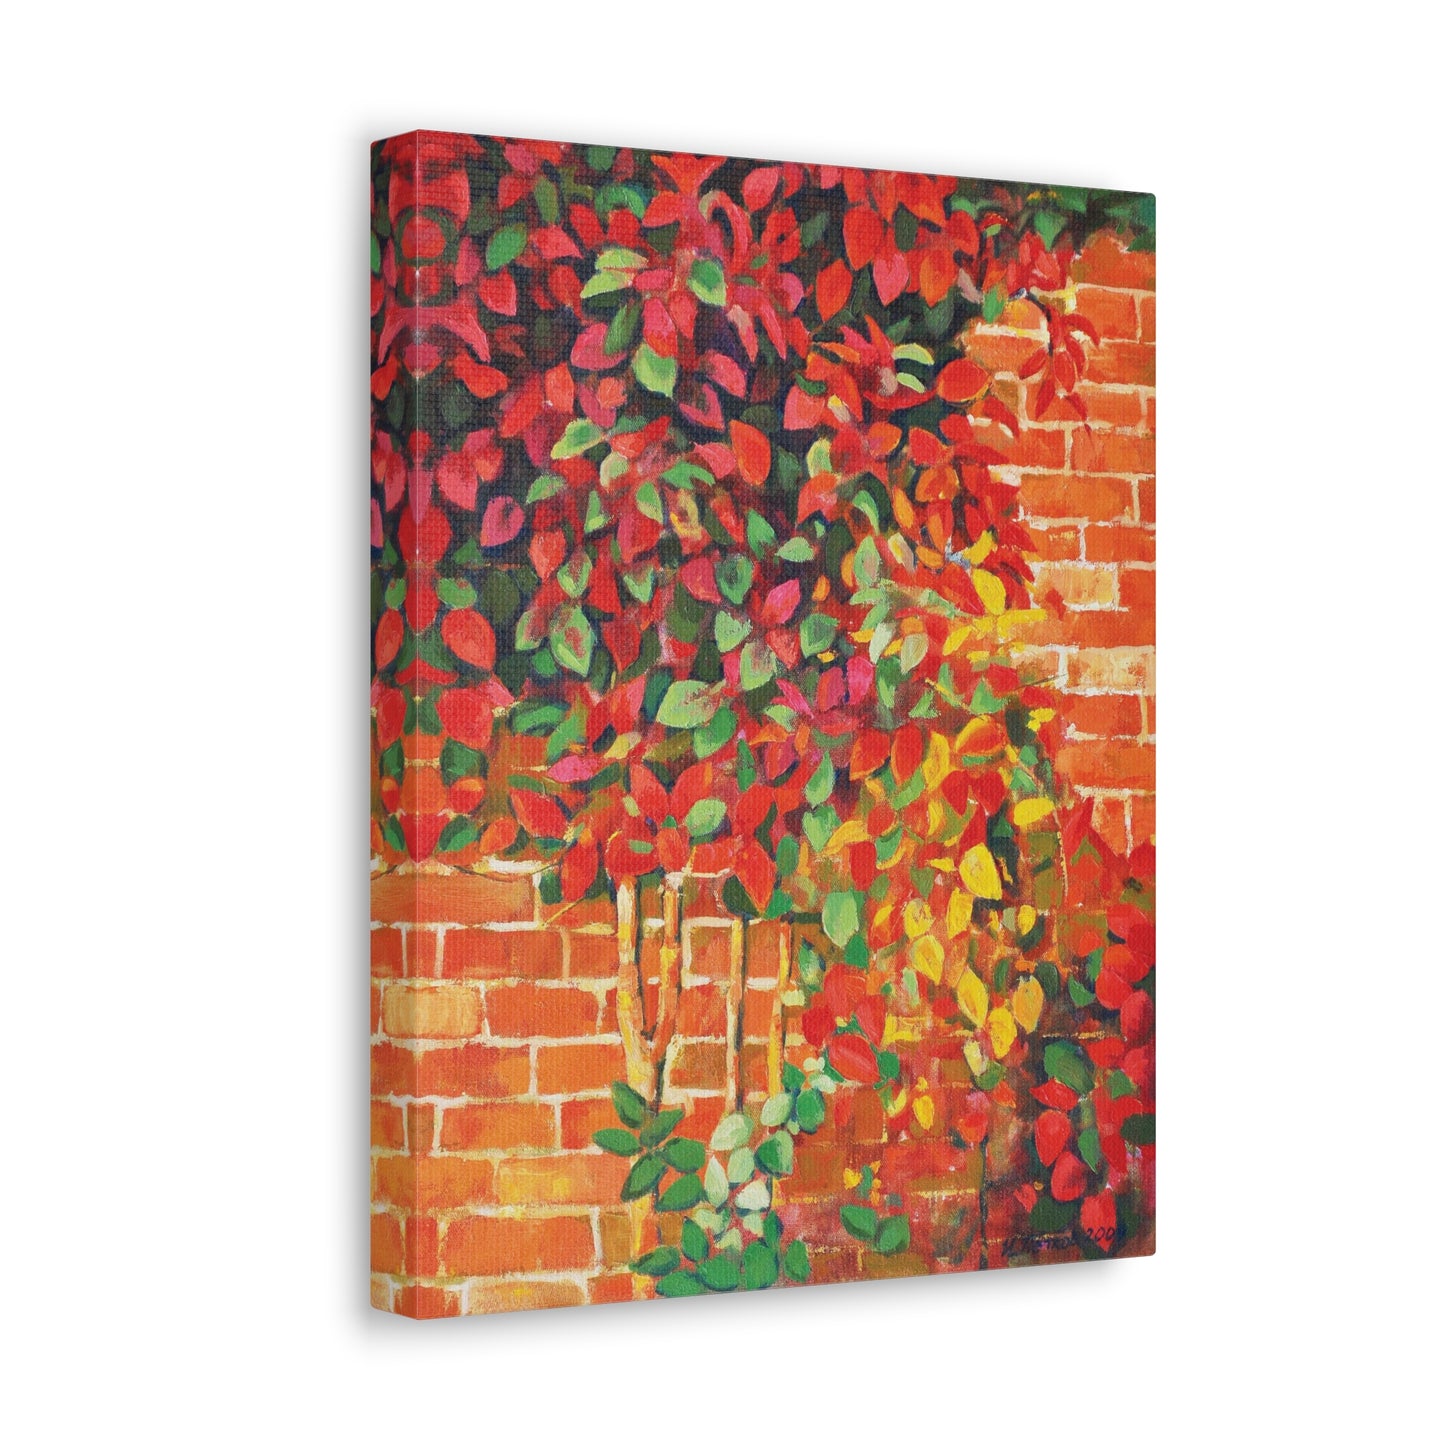 Autumn Impression on the Wall - Canvas Print